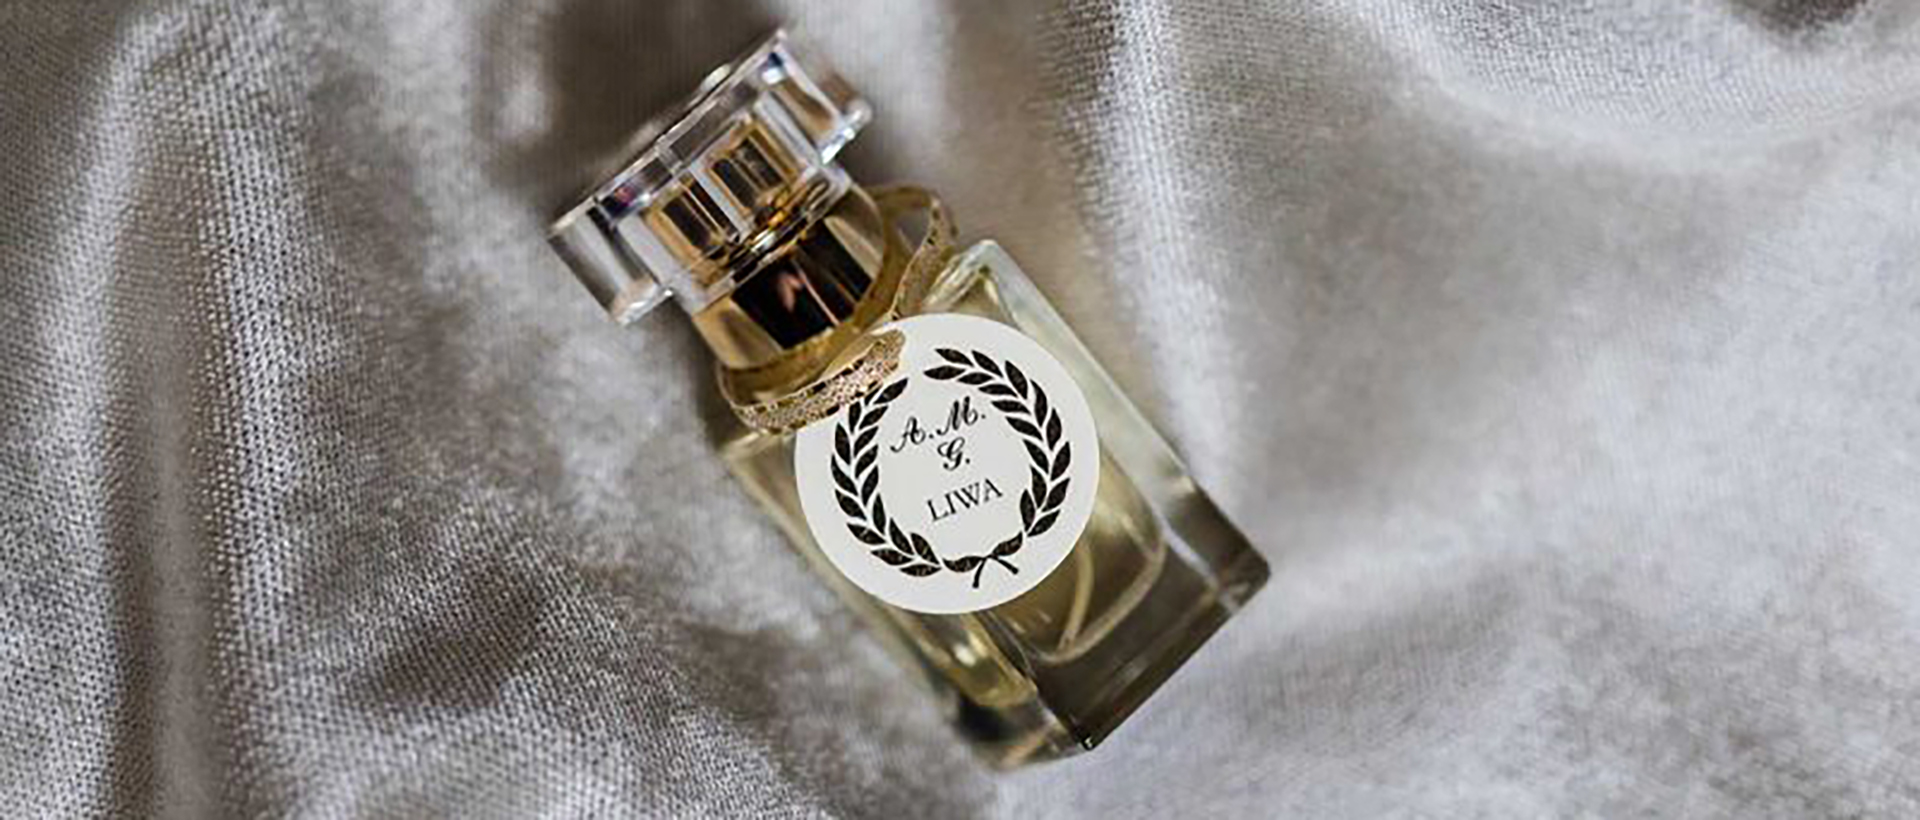 new fragrances image